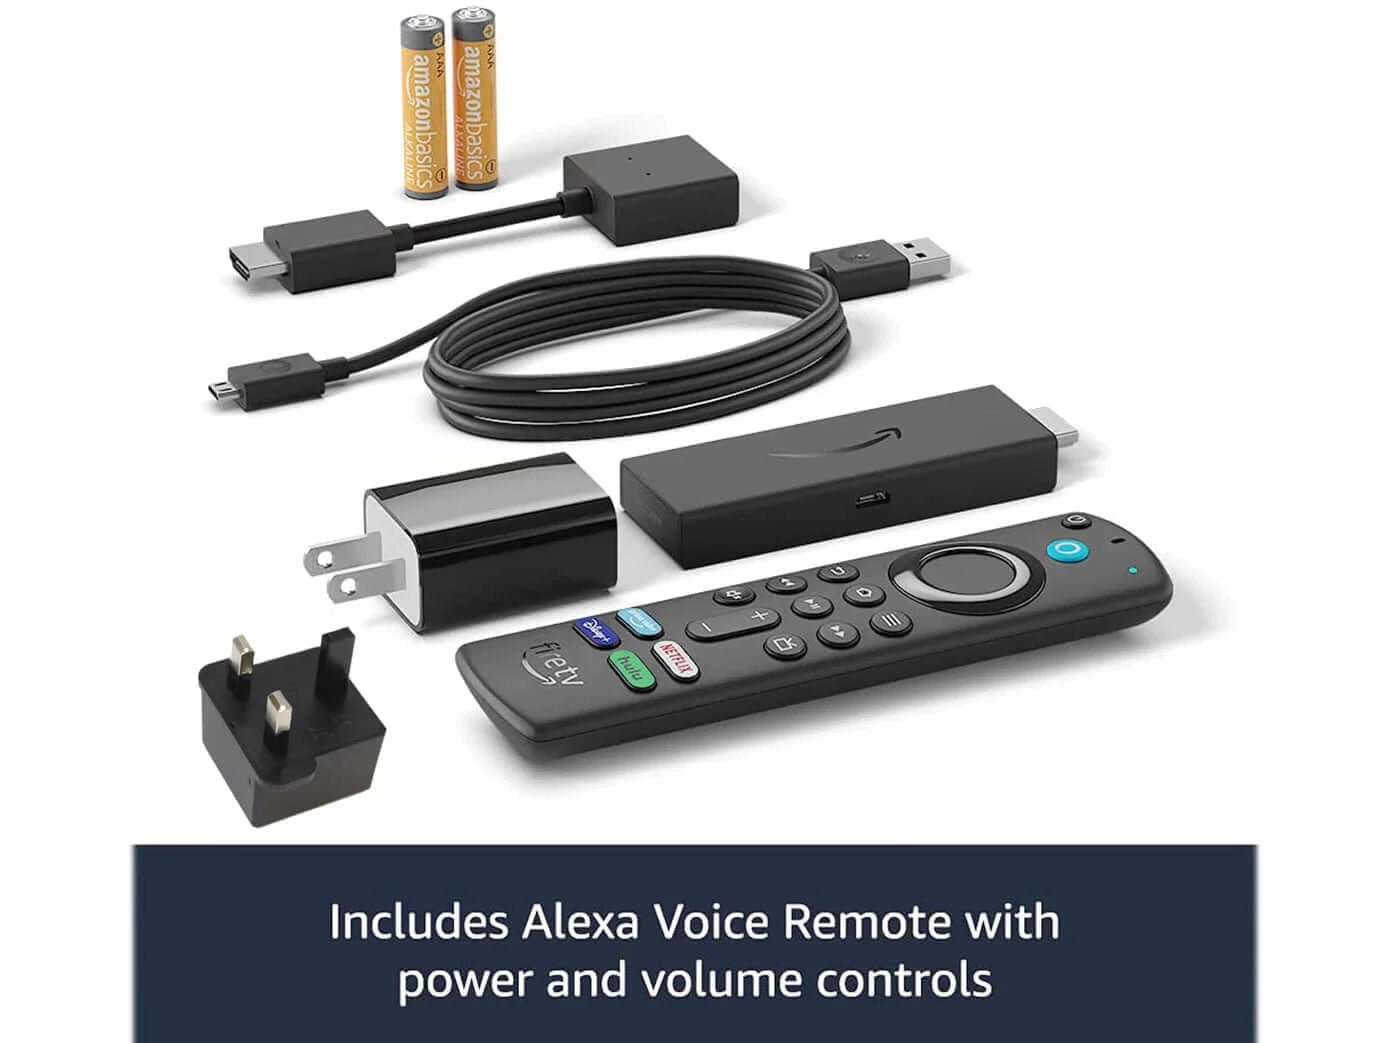 New  Firestick Fire TV Stick Lite Alexa Voice Remote Lite with Remote